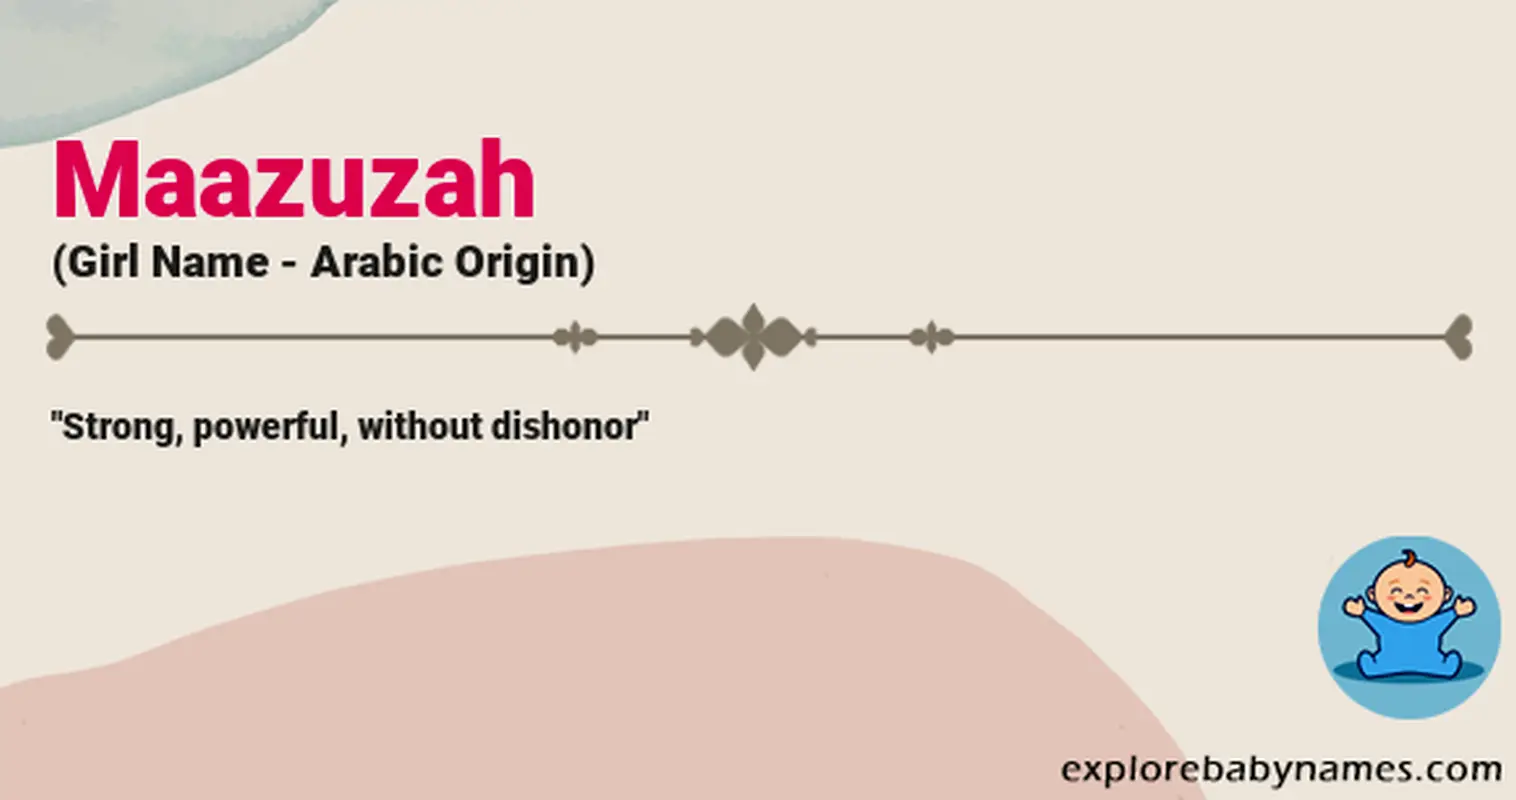 Meaning of Maazuzah